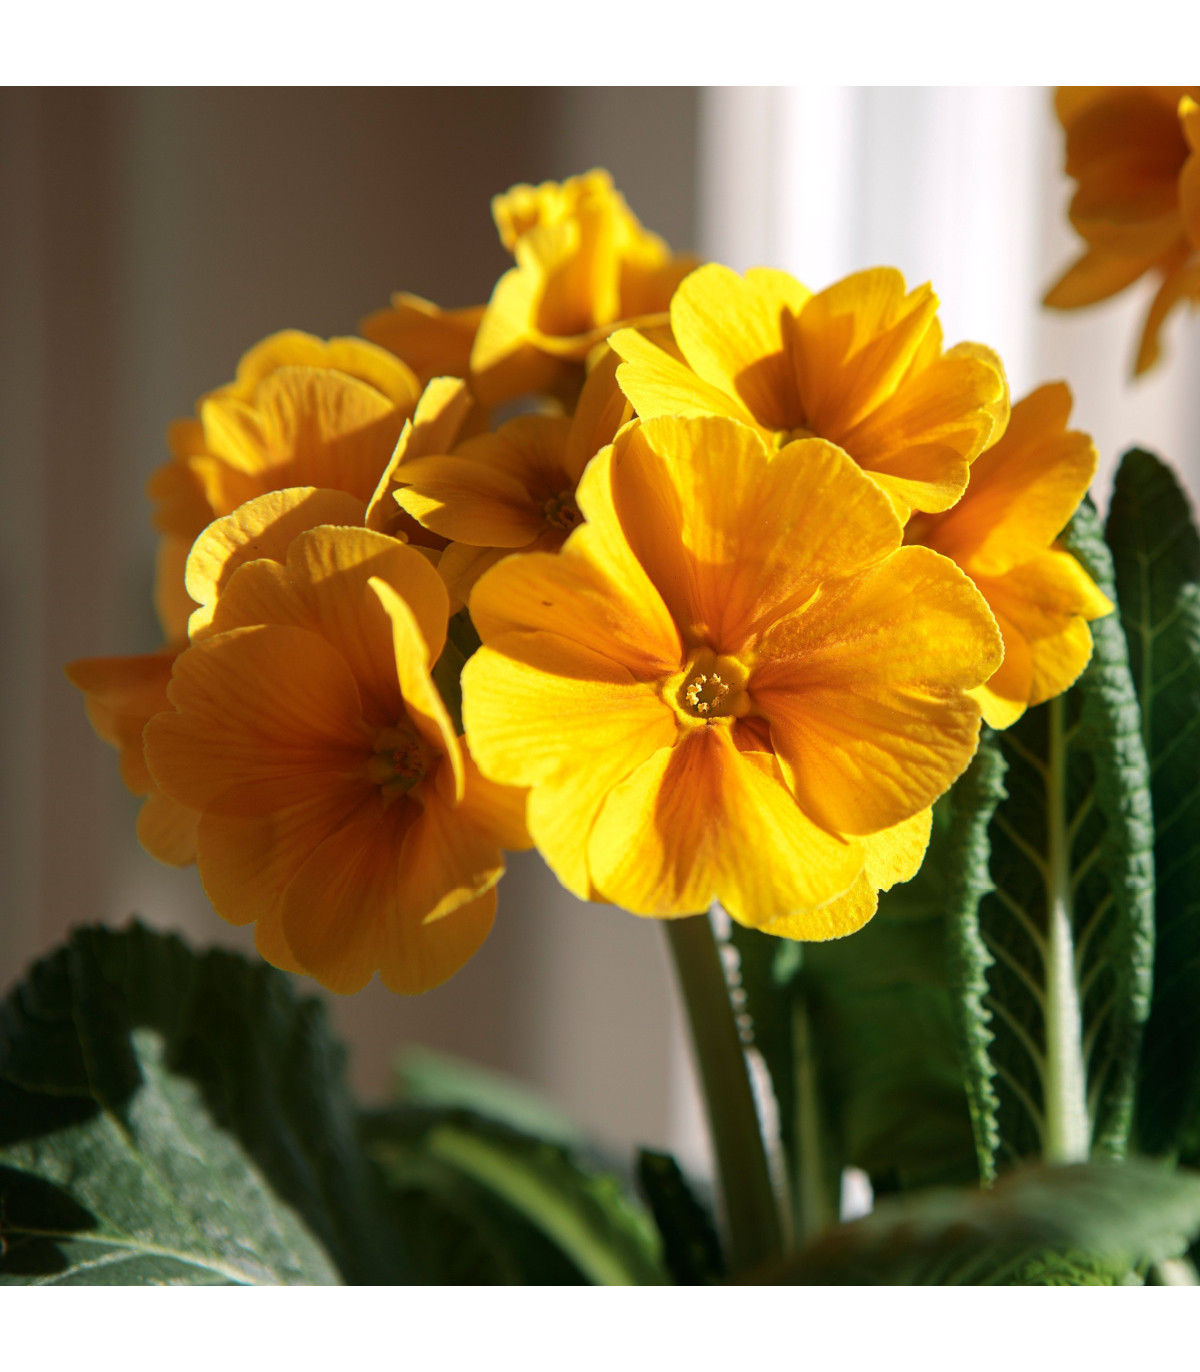 Prvosienka Inara F1 Gold - Primula elatior - semená prvosienky - 20 ks ​